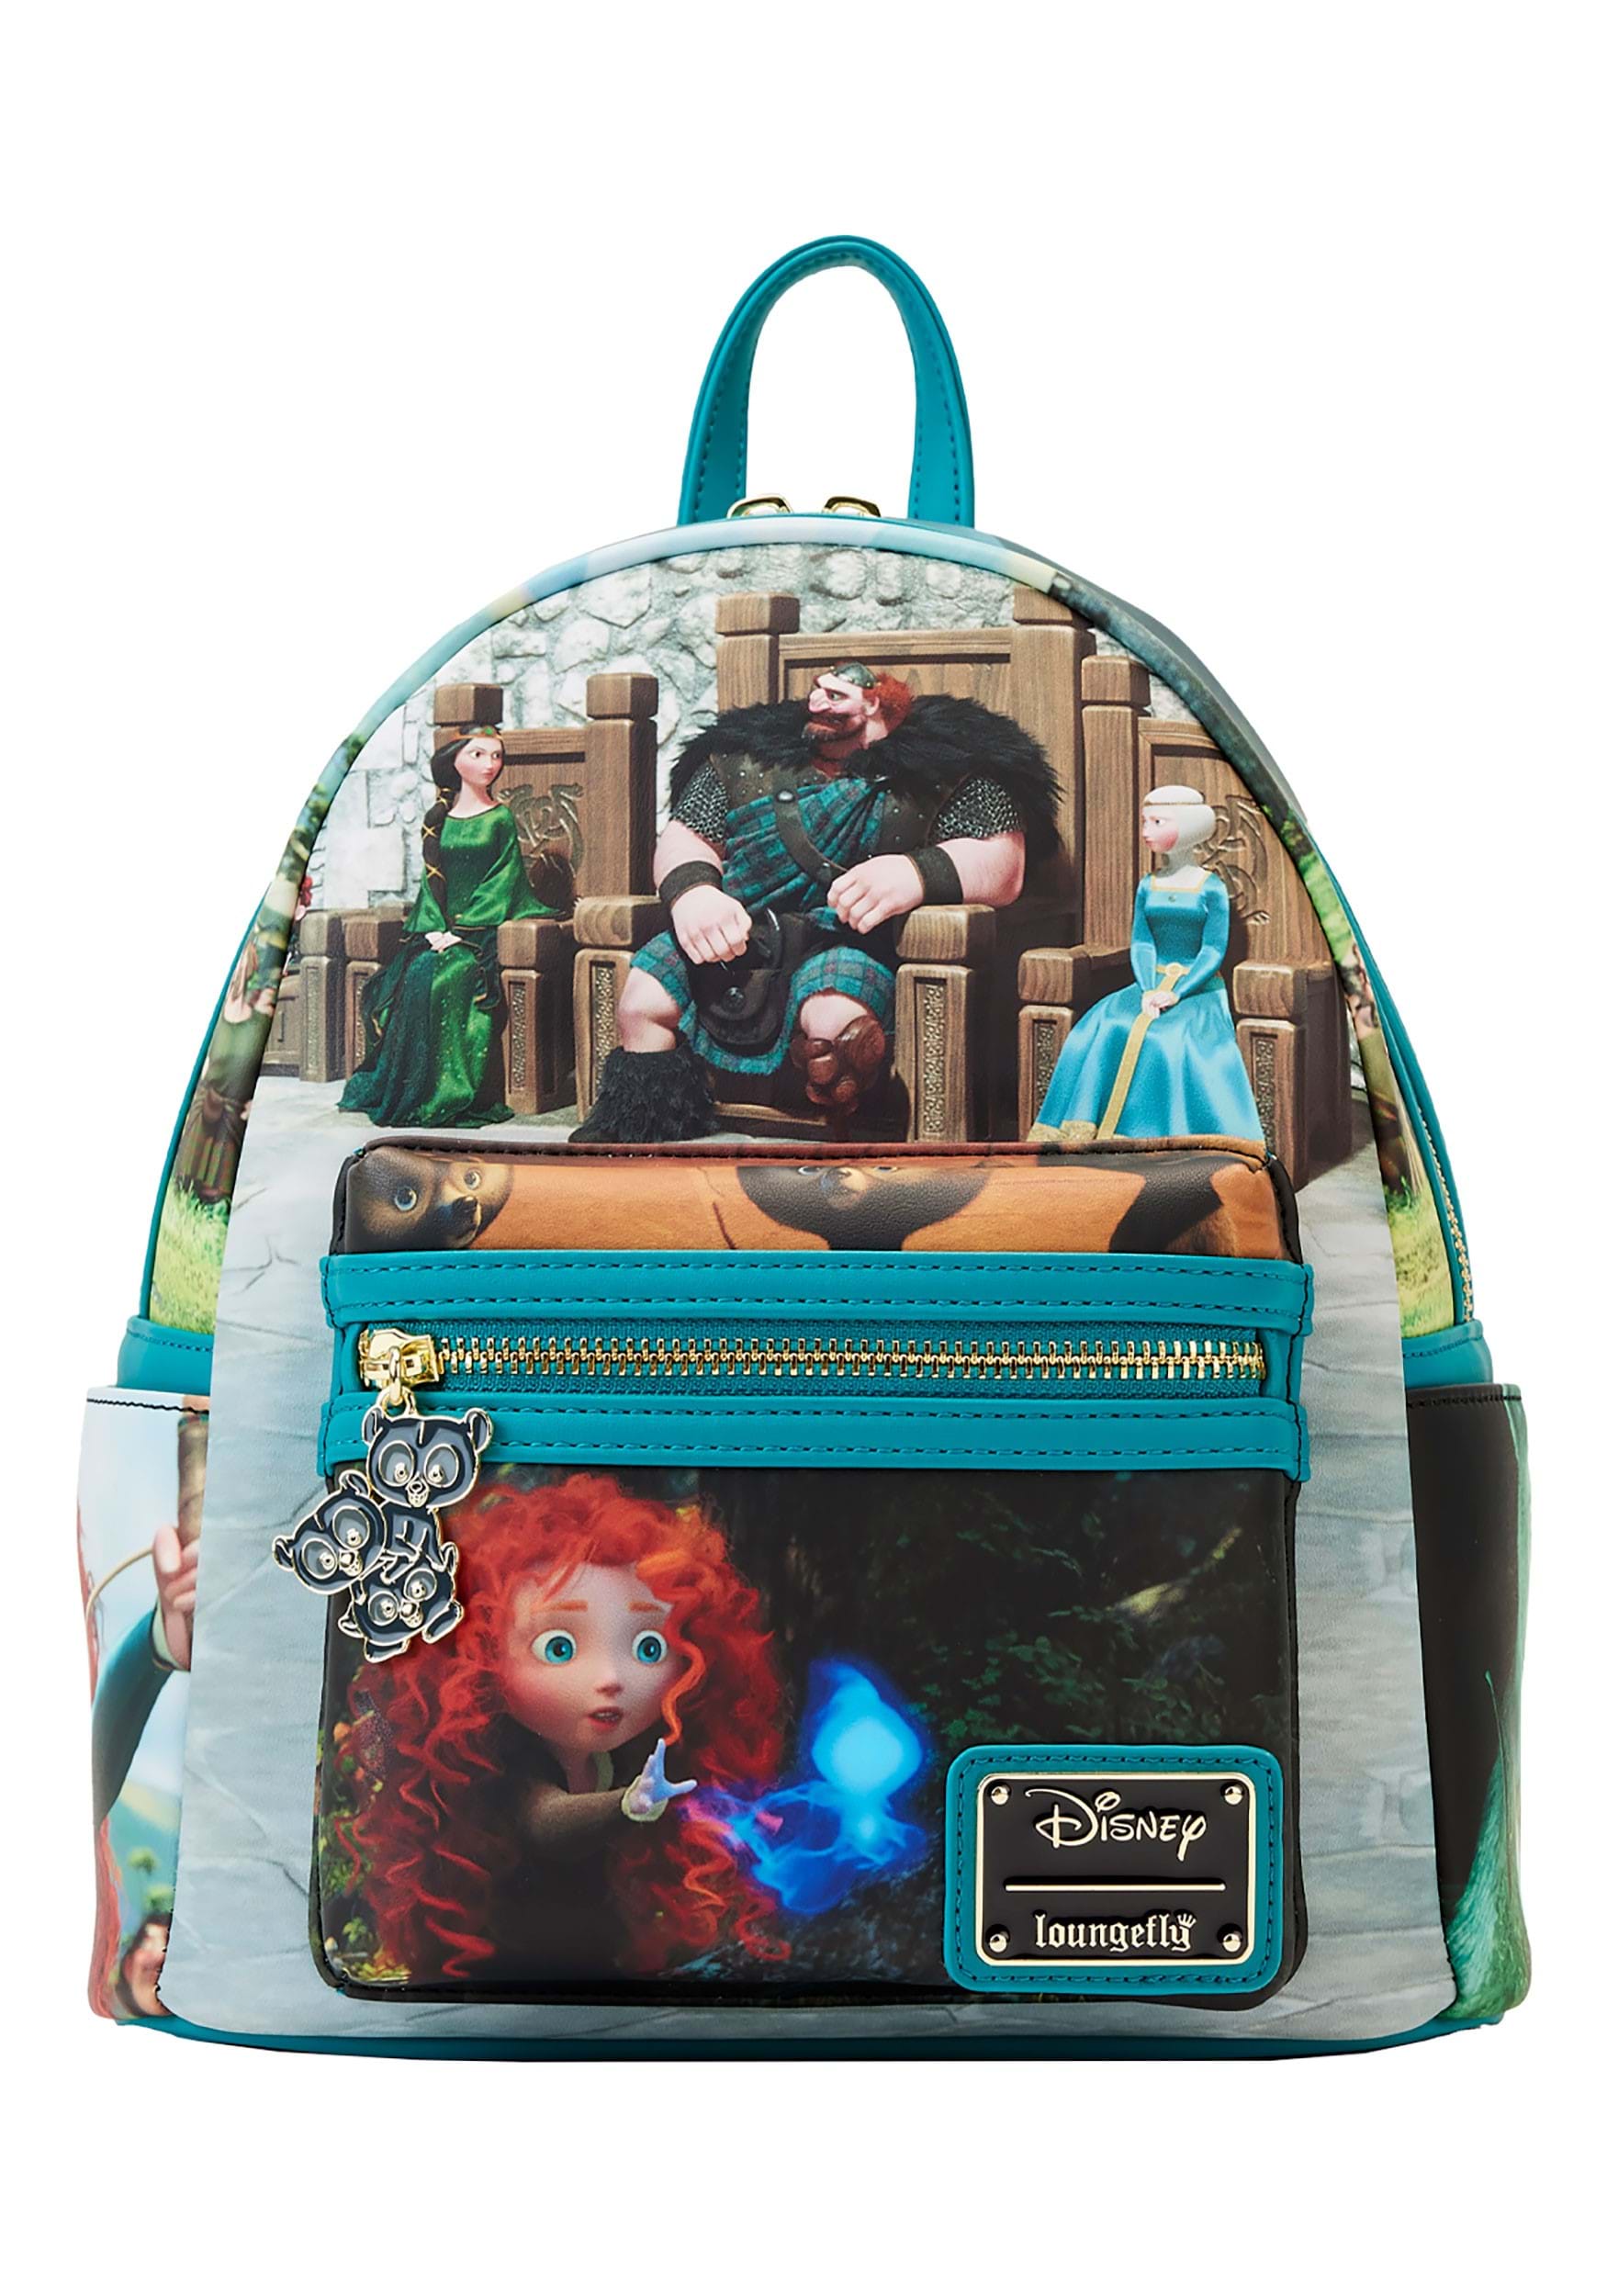 Disney Brave Merida Princess Scene Mini Backpack by Loungefly